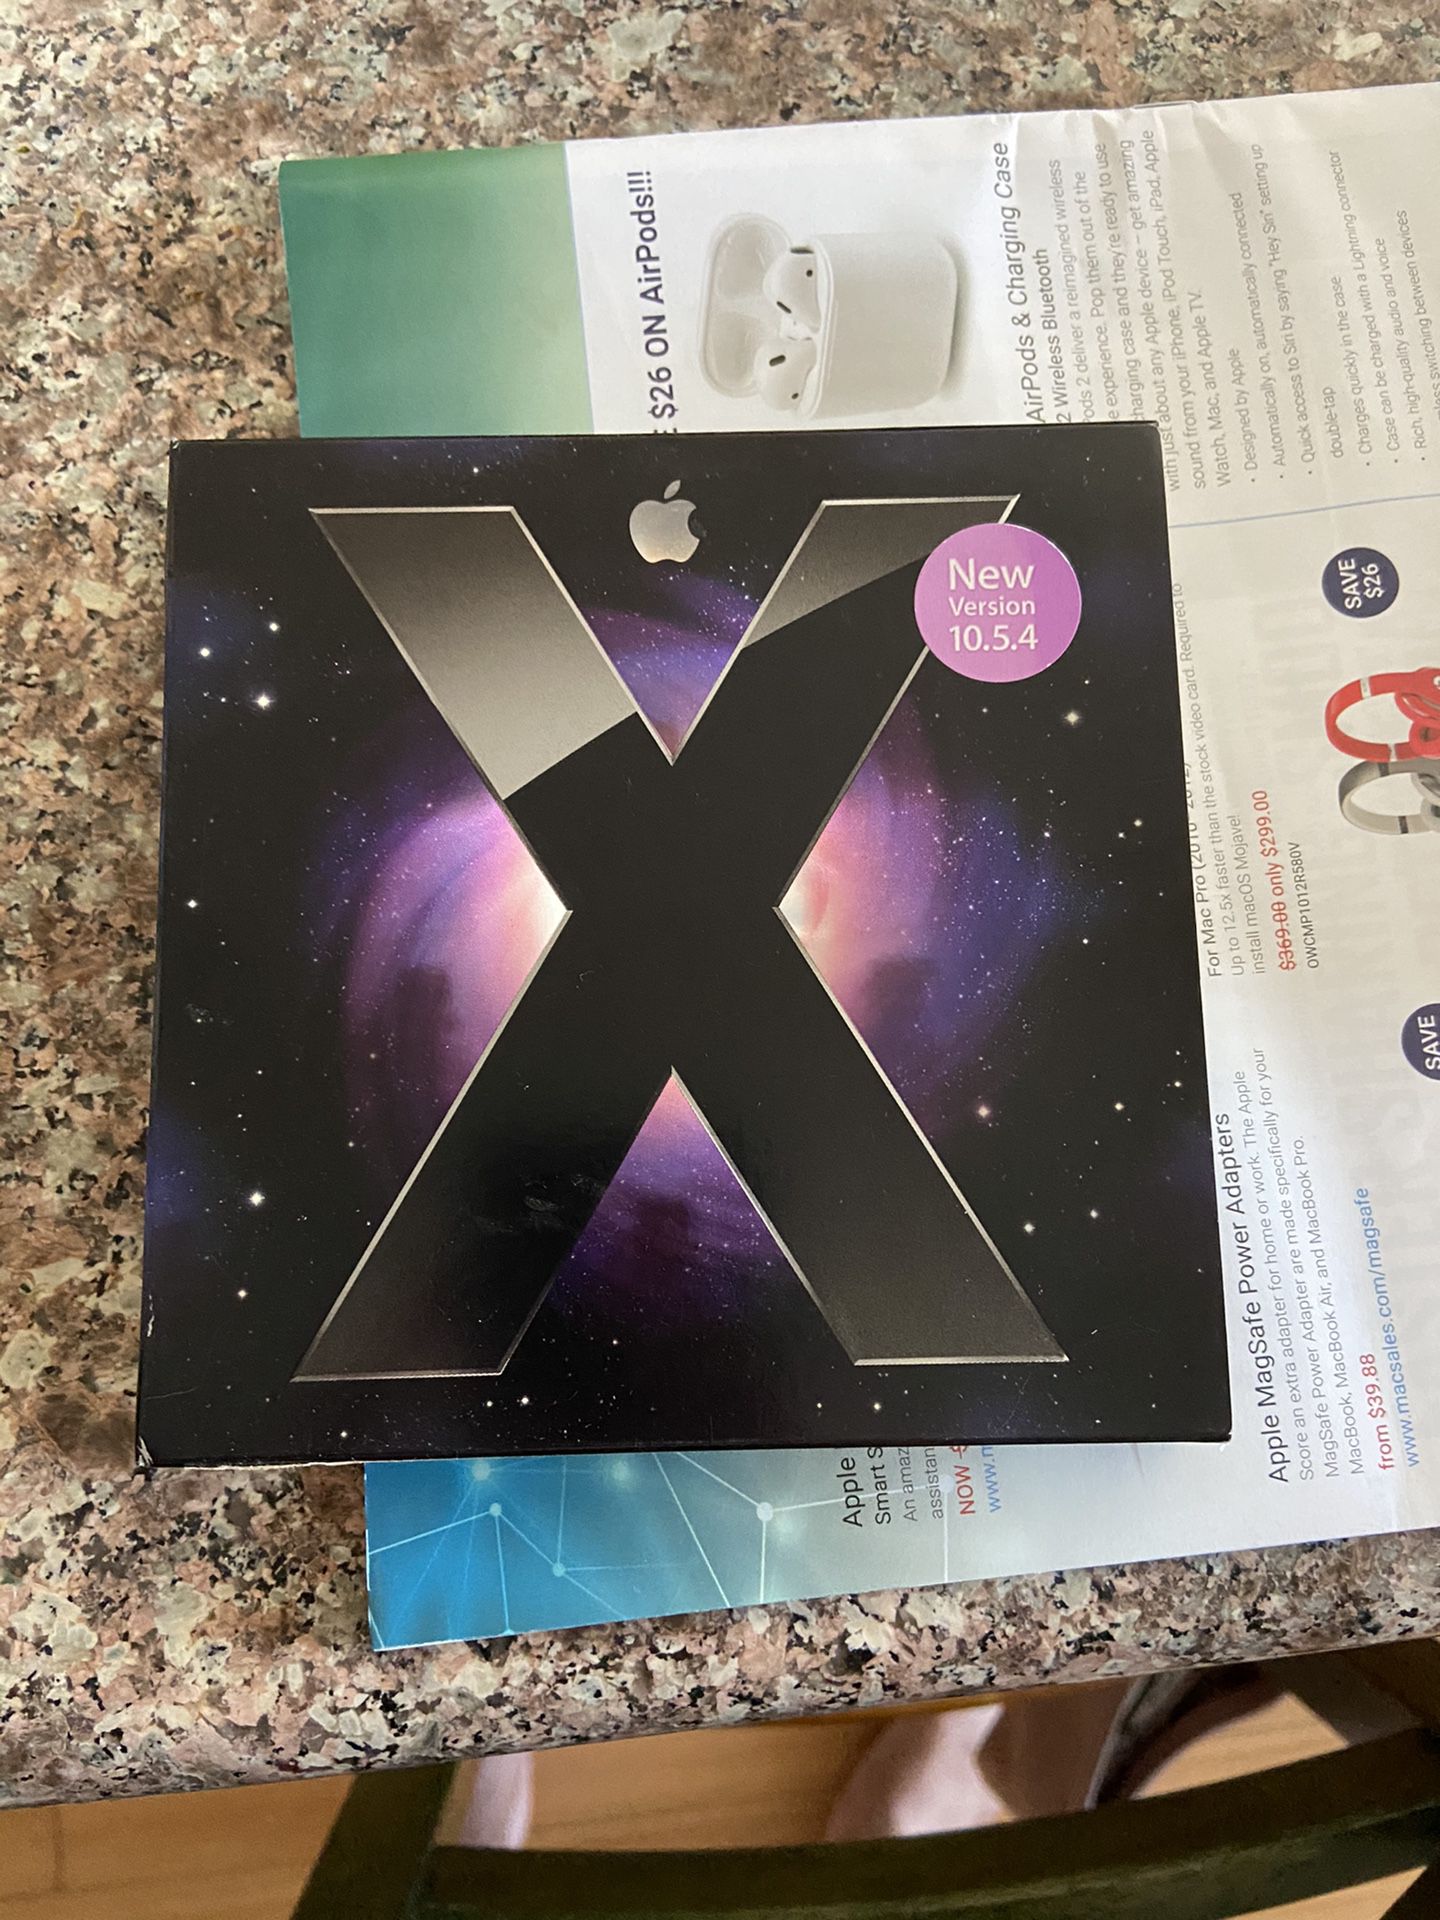 OS X Leopard Install disc